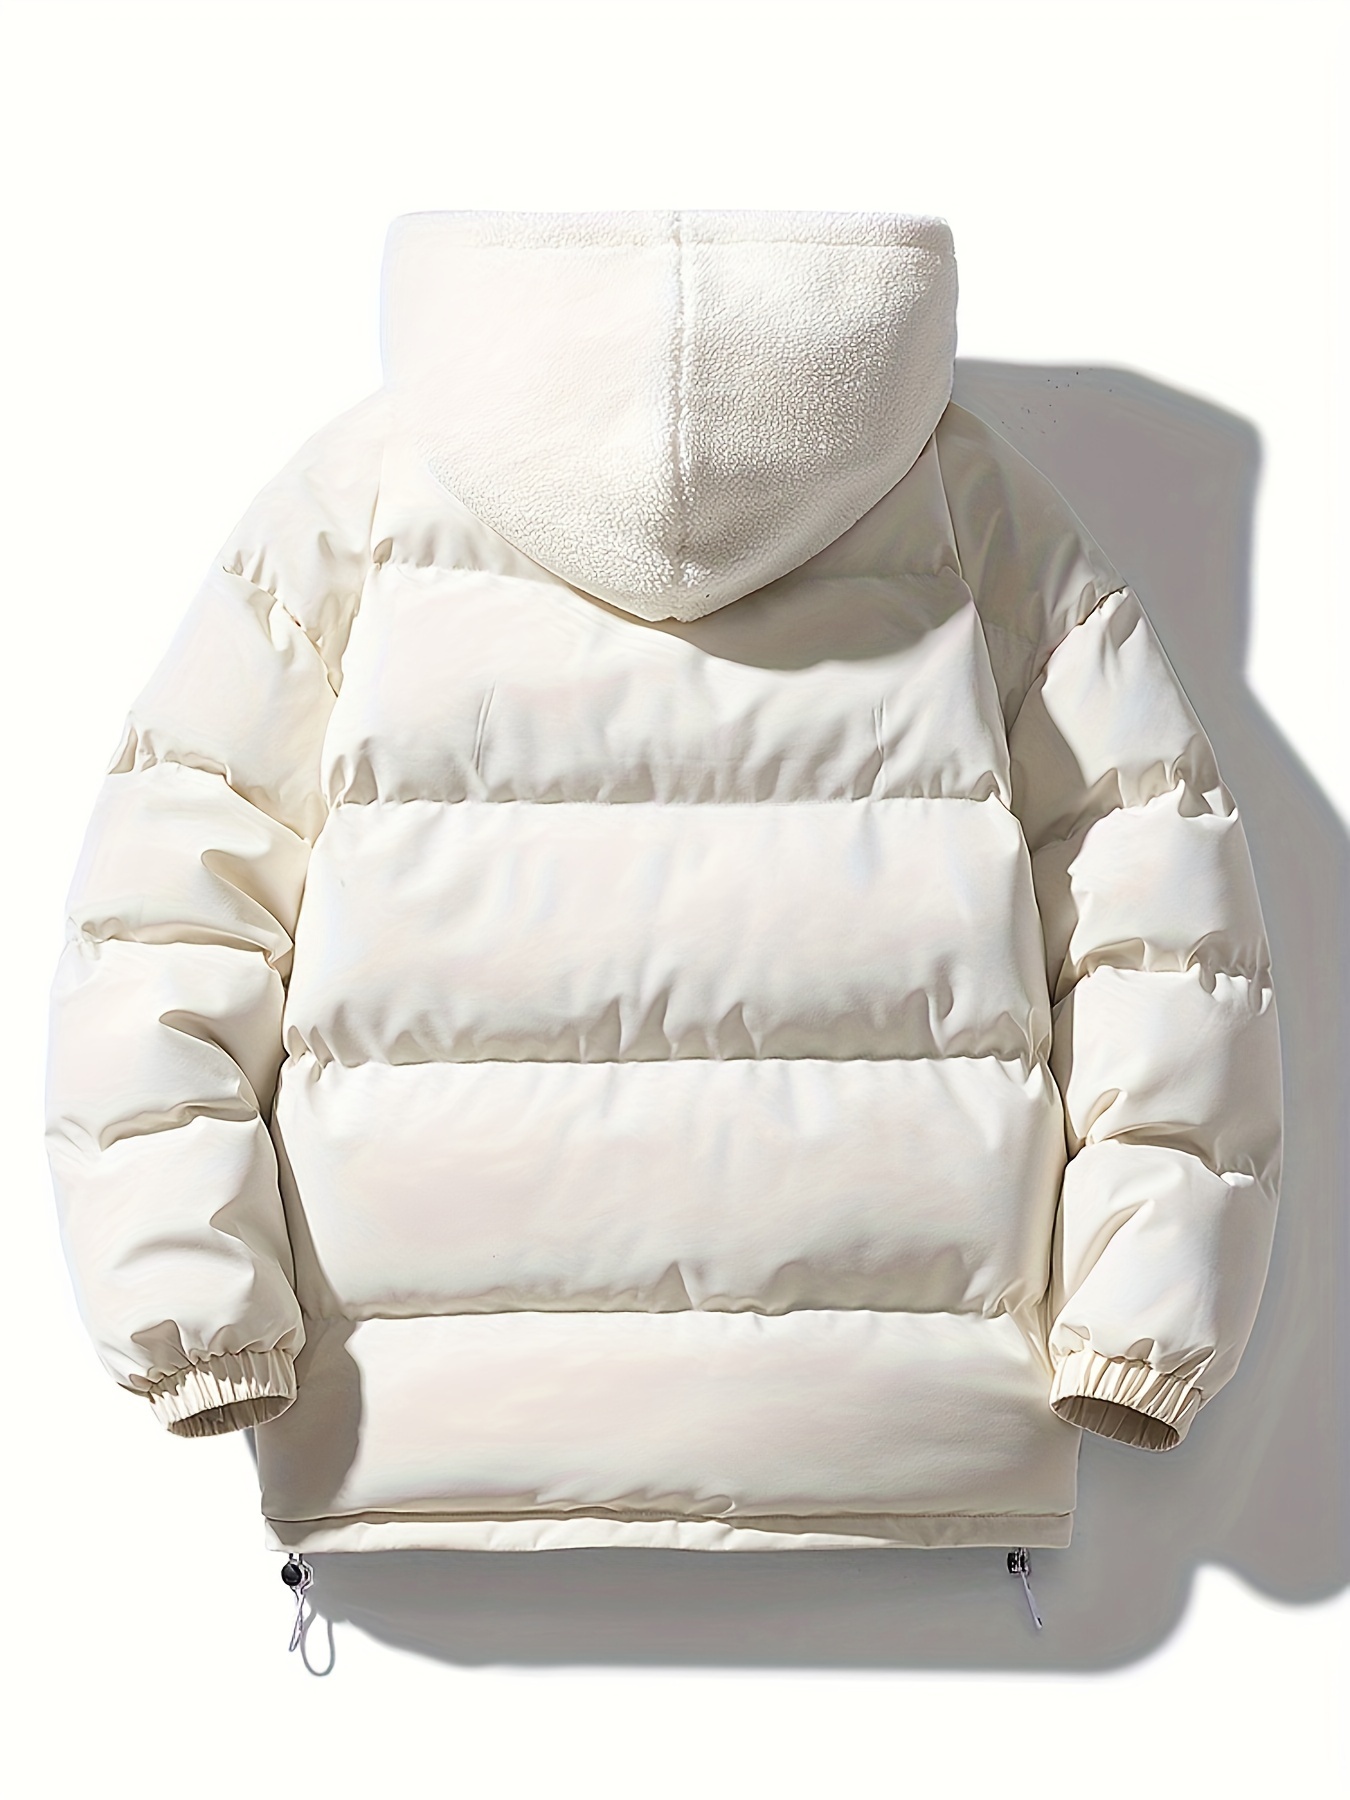 2 in 1 winter thickened versatile warm puffer coat winter outdoor sports thermal coat womens activewear details 6